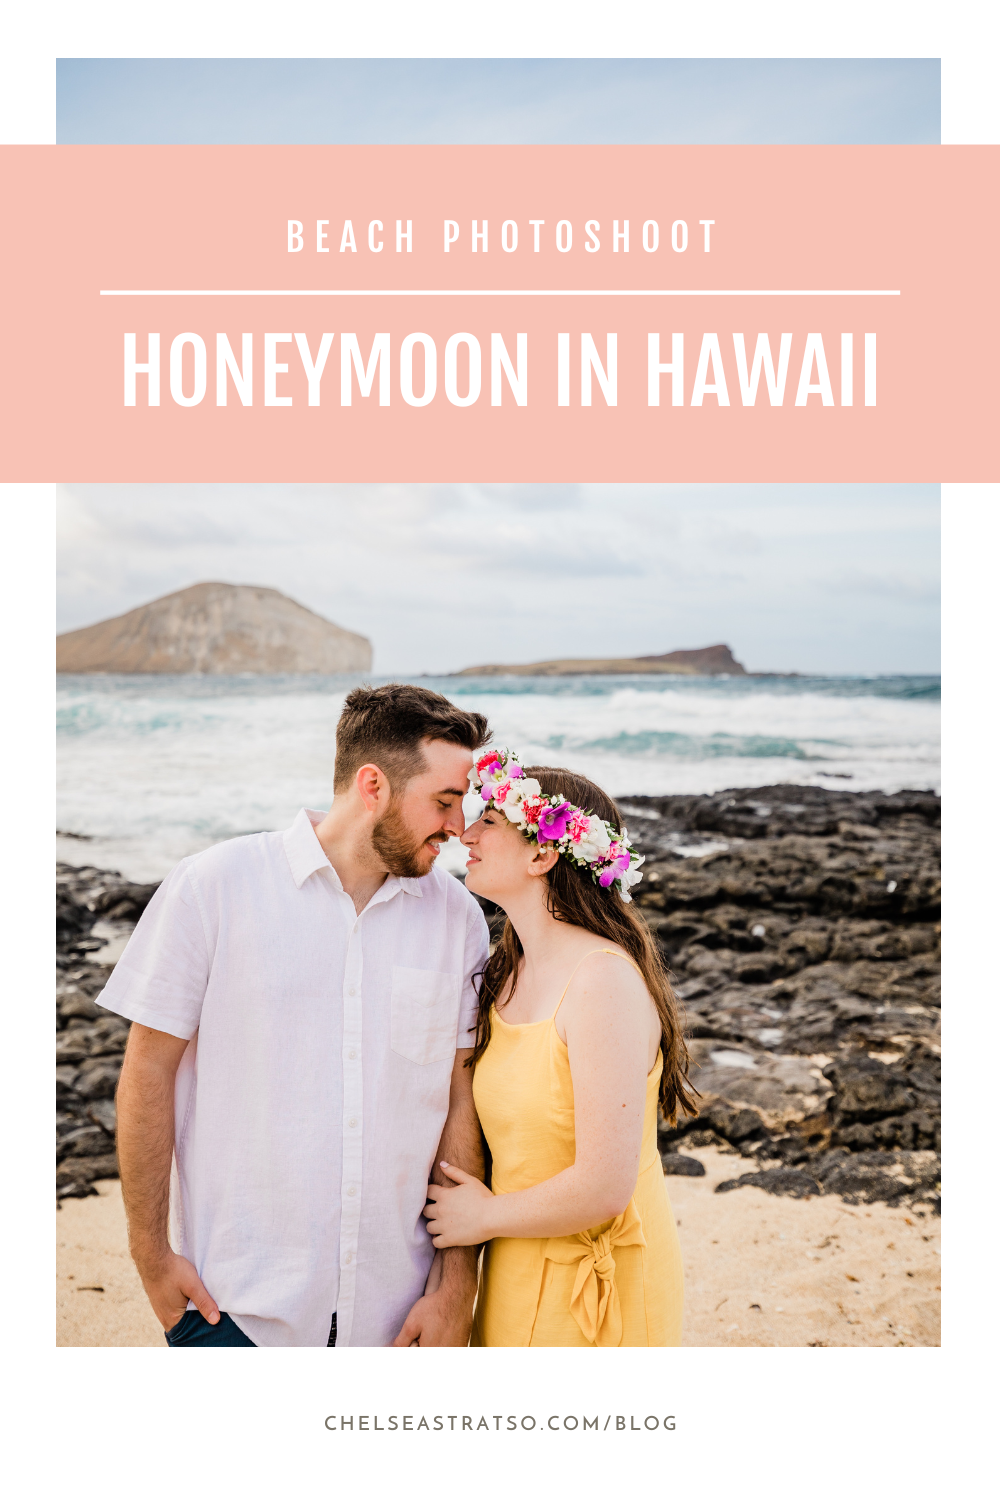 pinterest pin for beach photoshoot honeymoon in hawaii